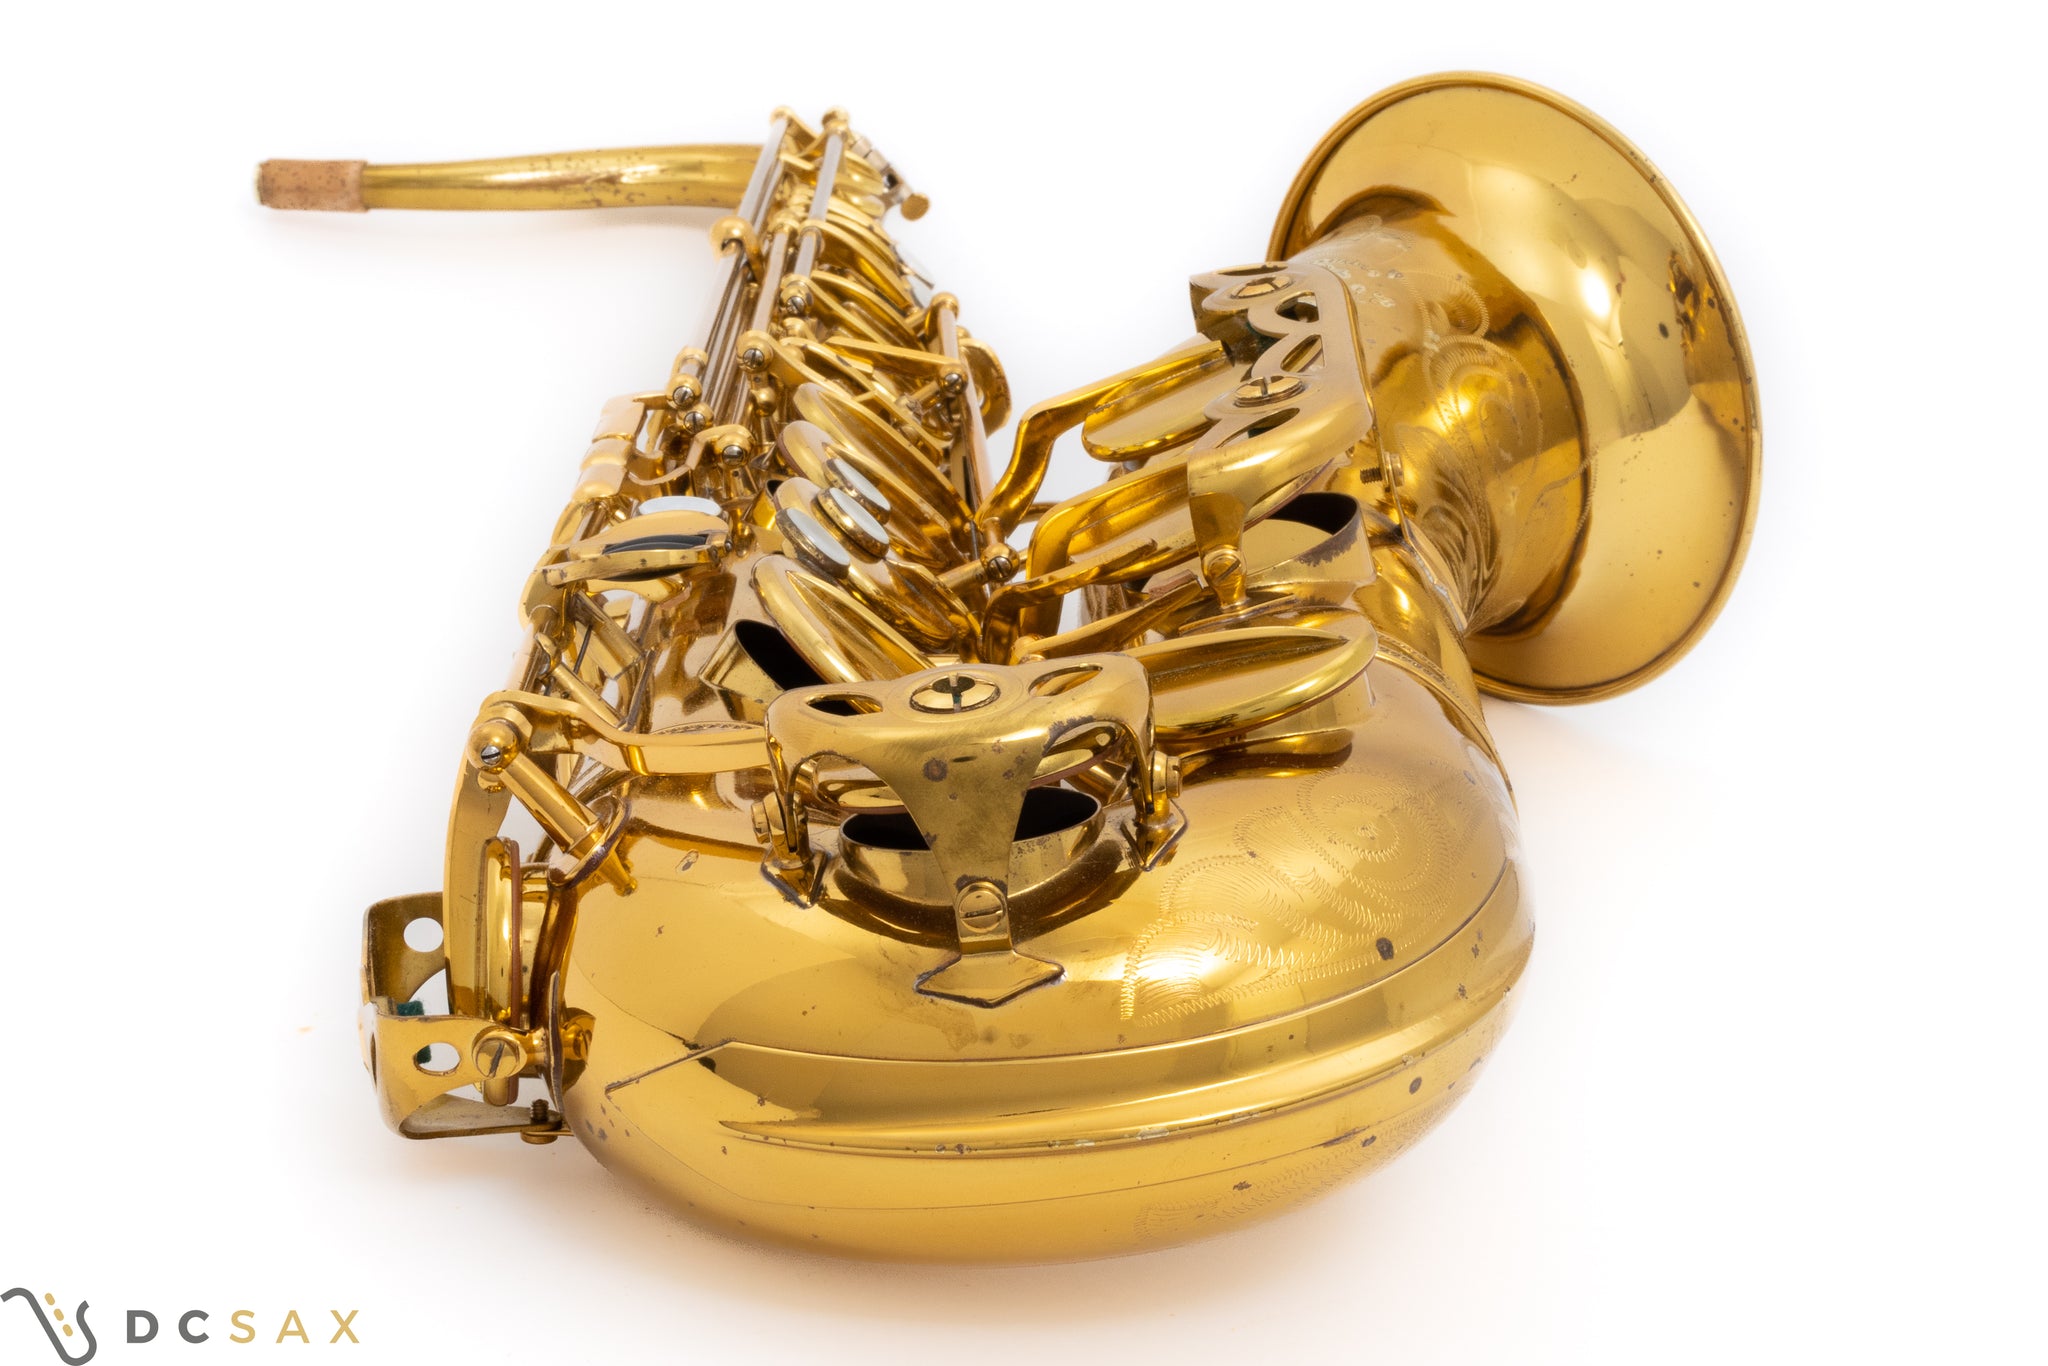 92,xxx Selmer Mark VI Tenor Saxophone, 99% Original Lacquer, Overhaul, Video